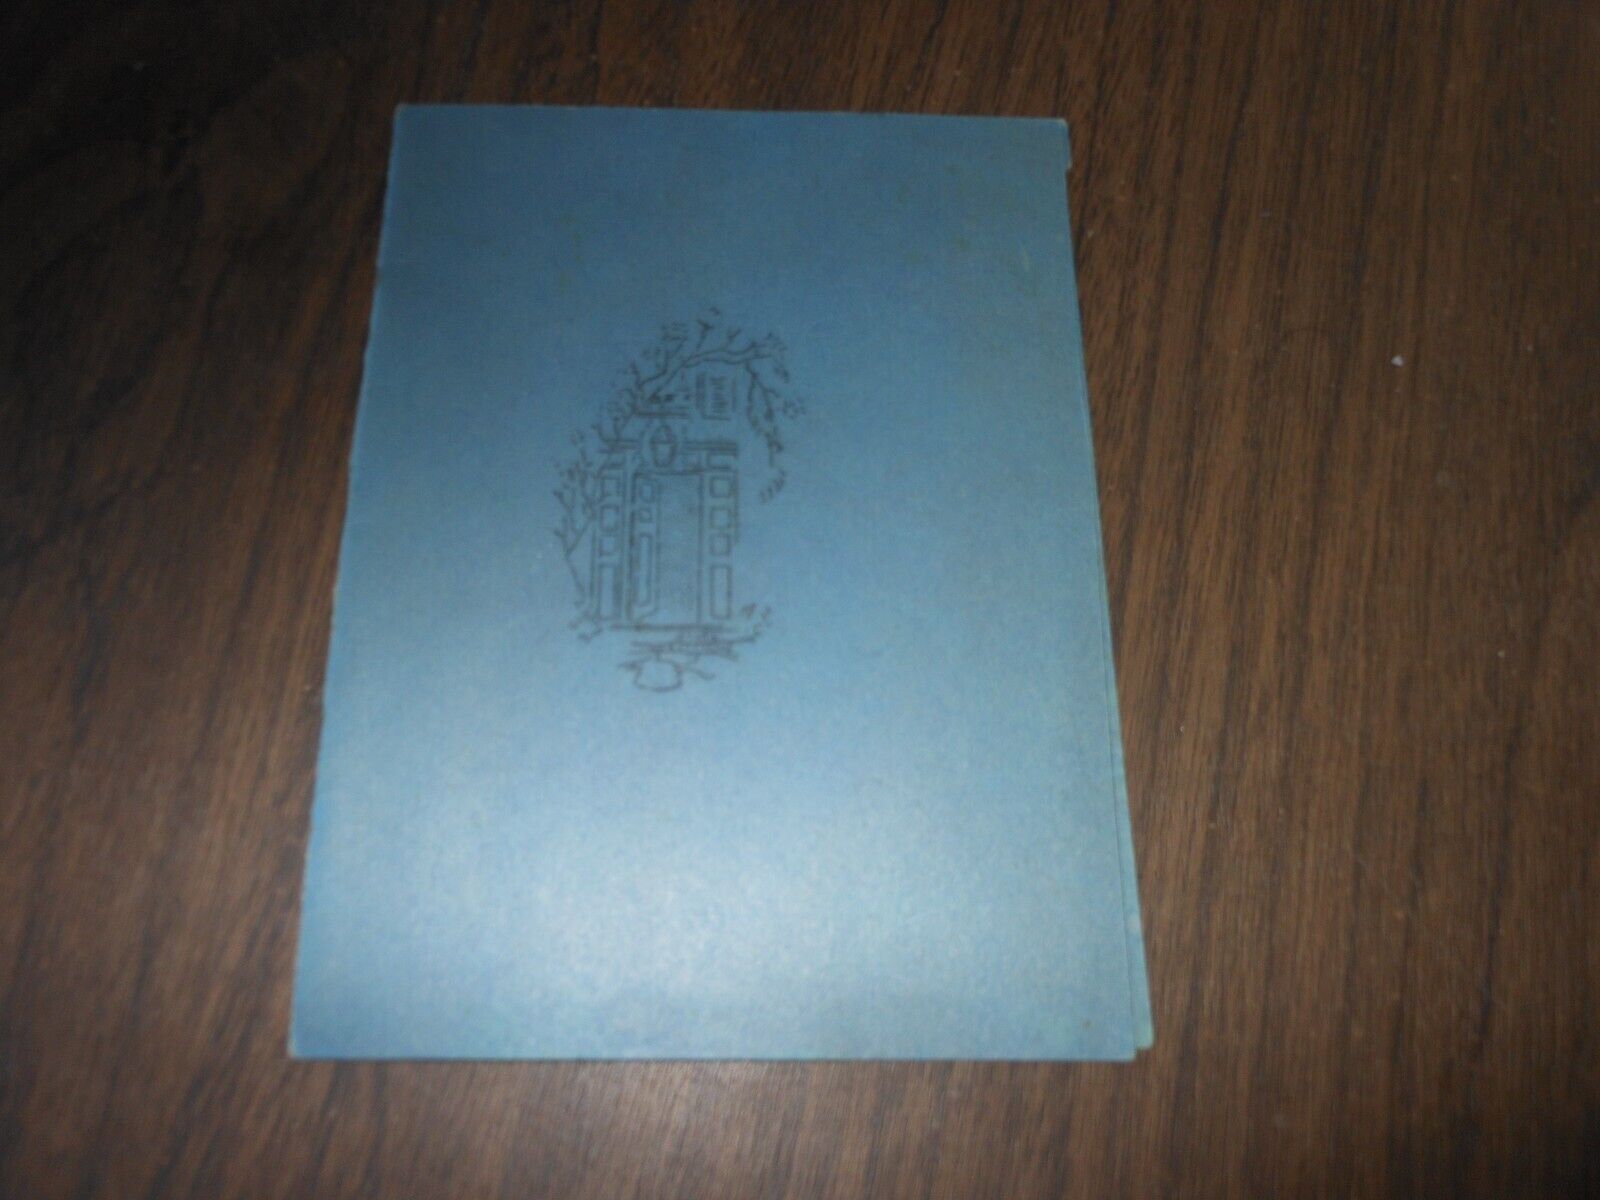 Vtg Prowsville Social Club Monthly Meeting Agenda/Program Jan-Dec 1941 Booklet